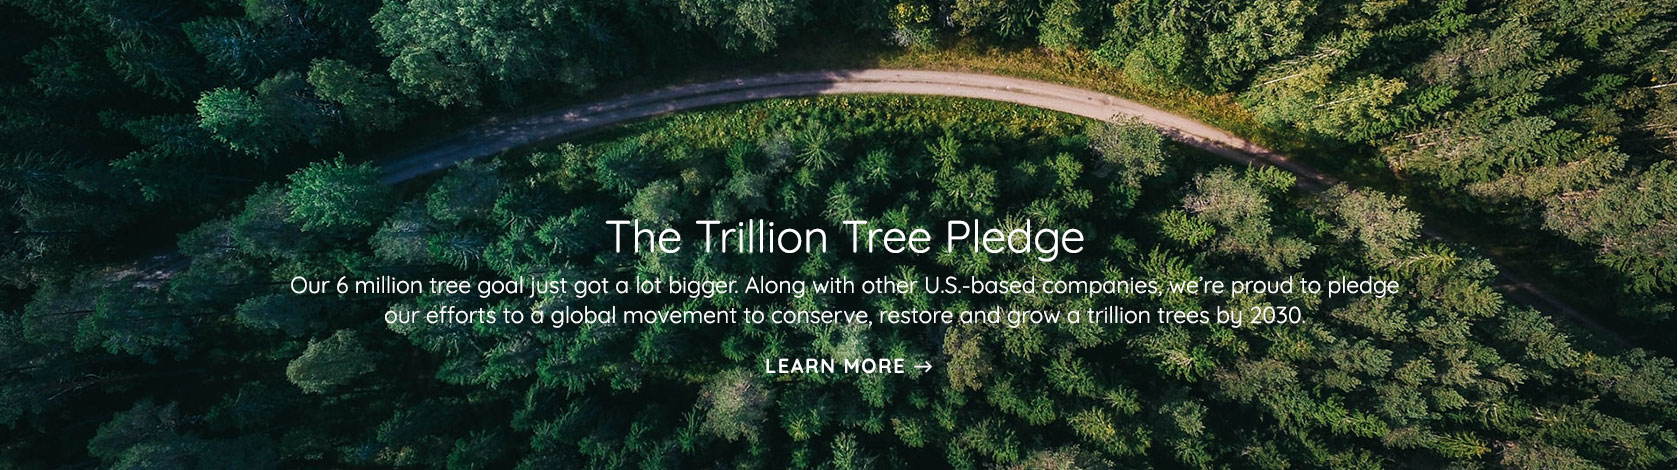 Trillion Tree Pledge